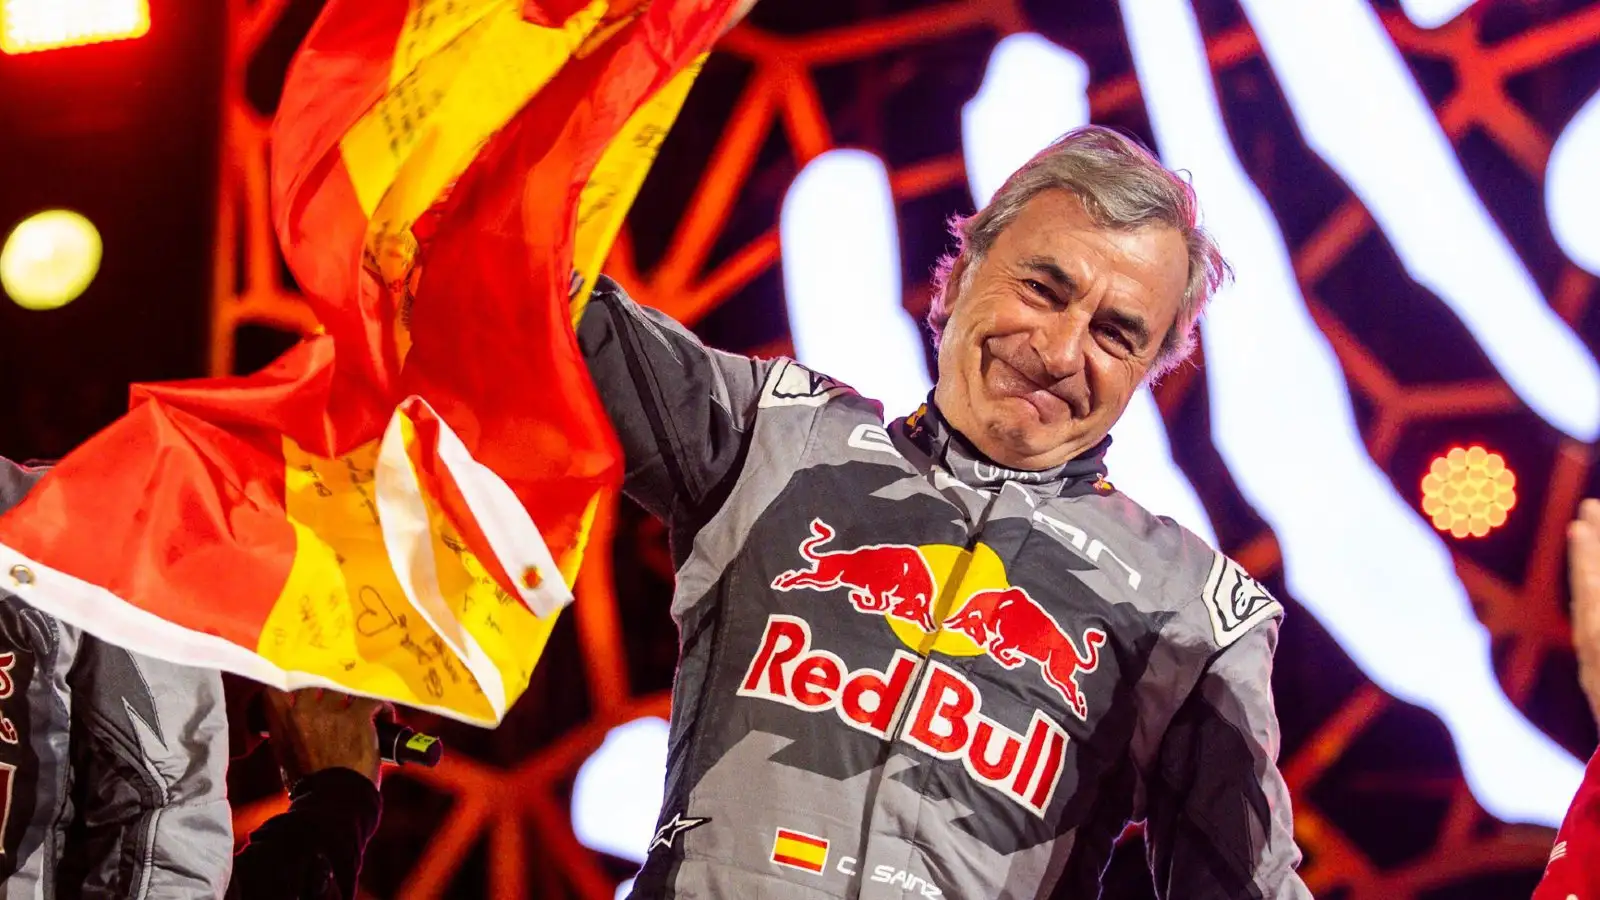 Carlos Sainz Snr celebrates an incredible fourth Dakar Rally win at the age of 61.